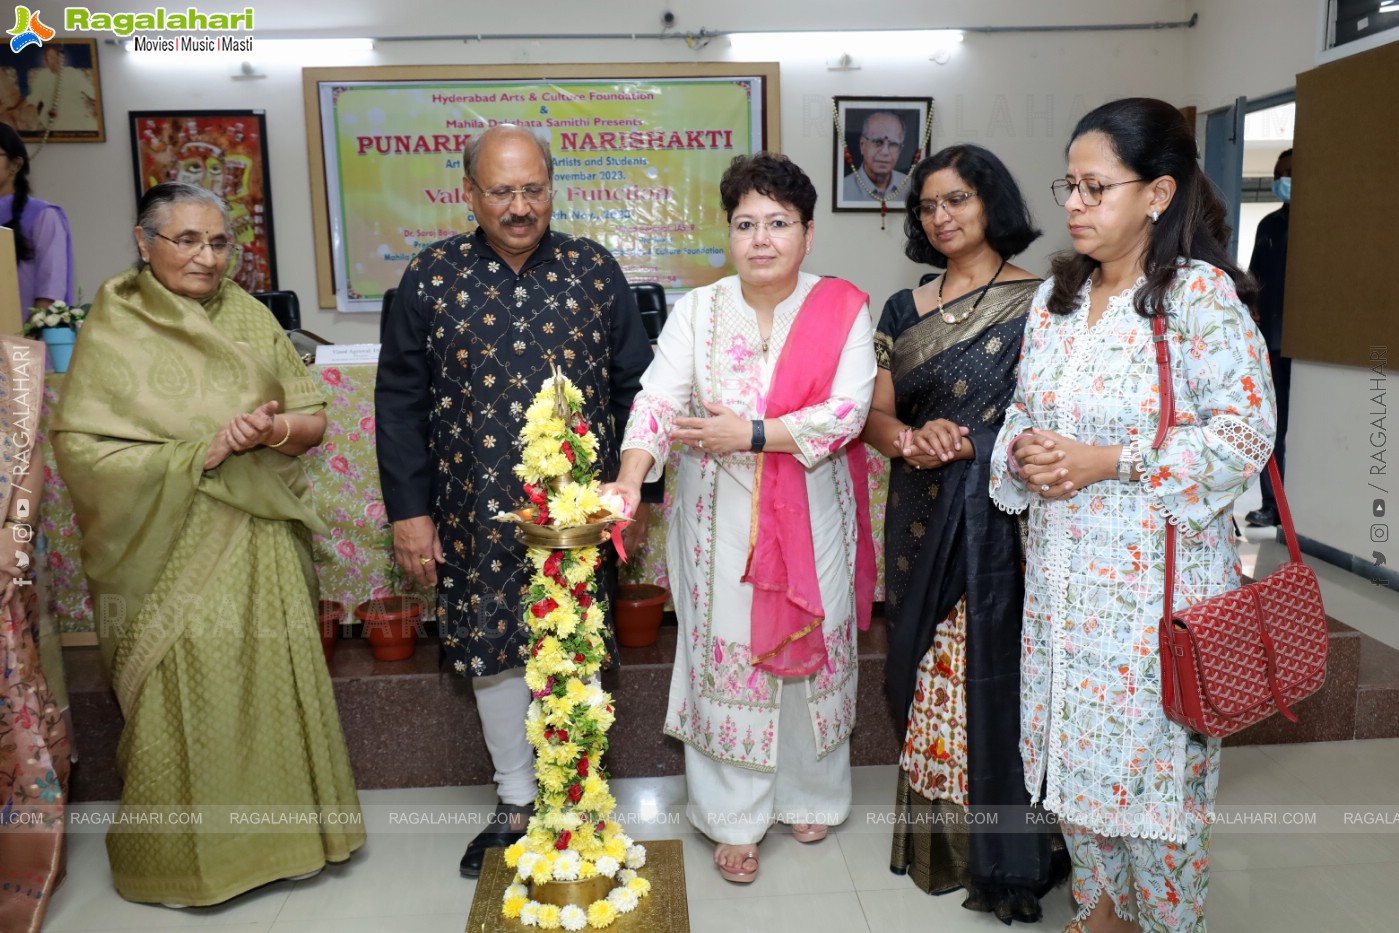 Punarkriti - Narishakti by Hyderabad Arts & Culture Foundation and Mahila Dakshata Samiti, Hyderabad